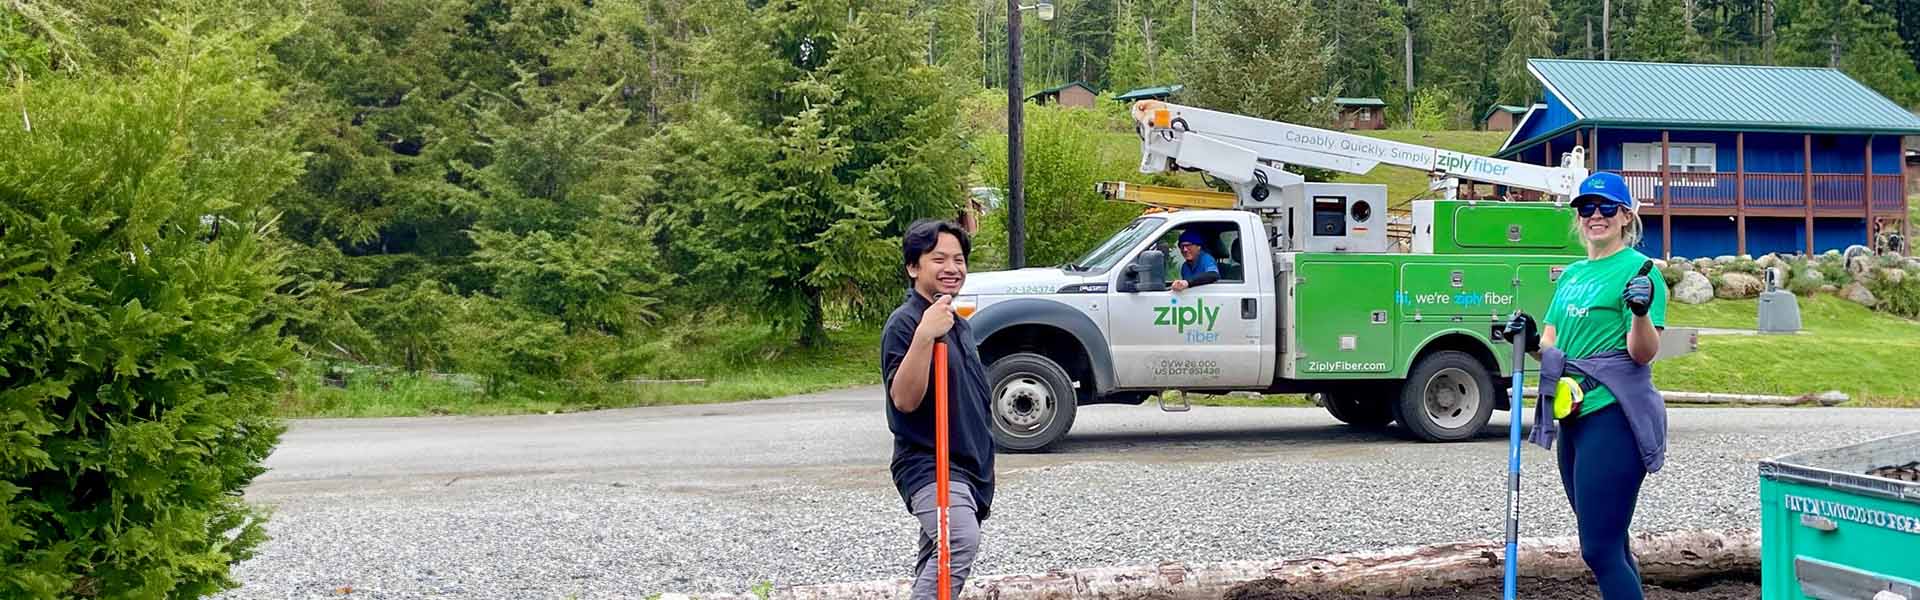 Ziply Fiber employee working with a nonprofit volunteer to install fiber-optic internet